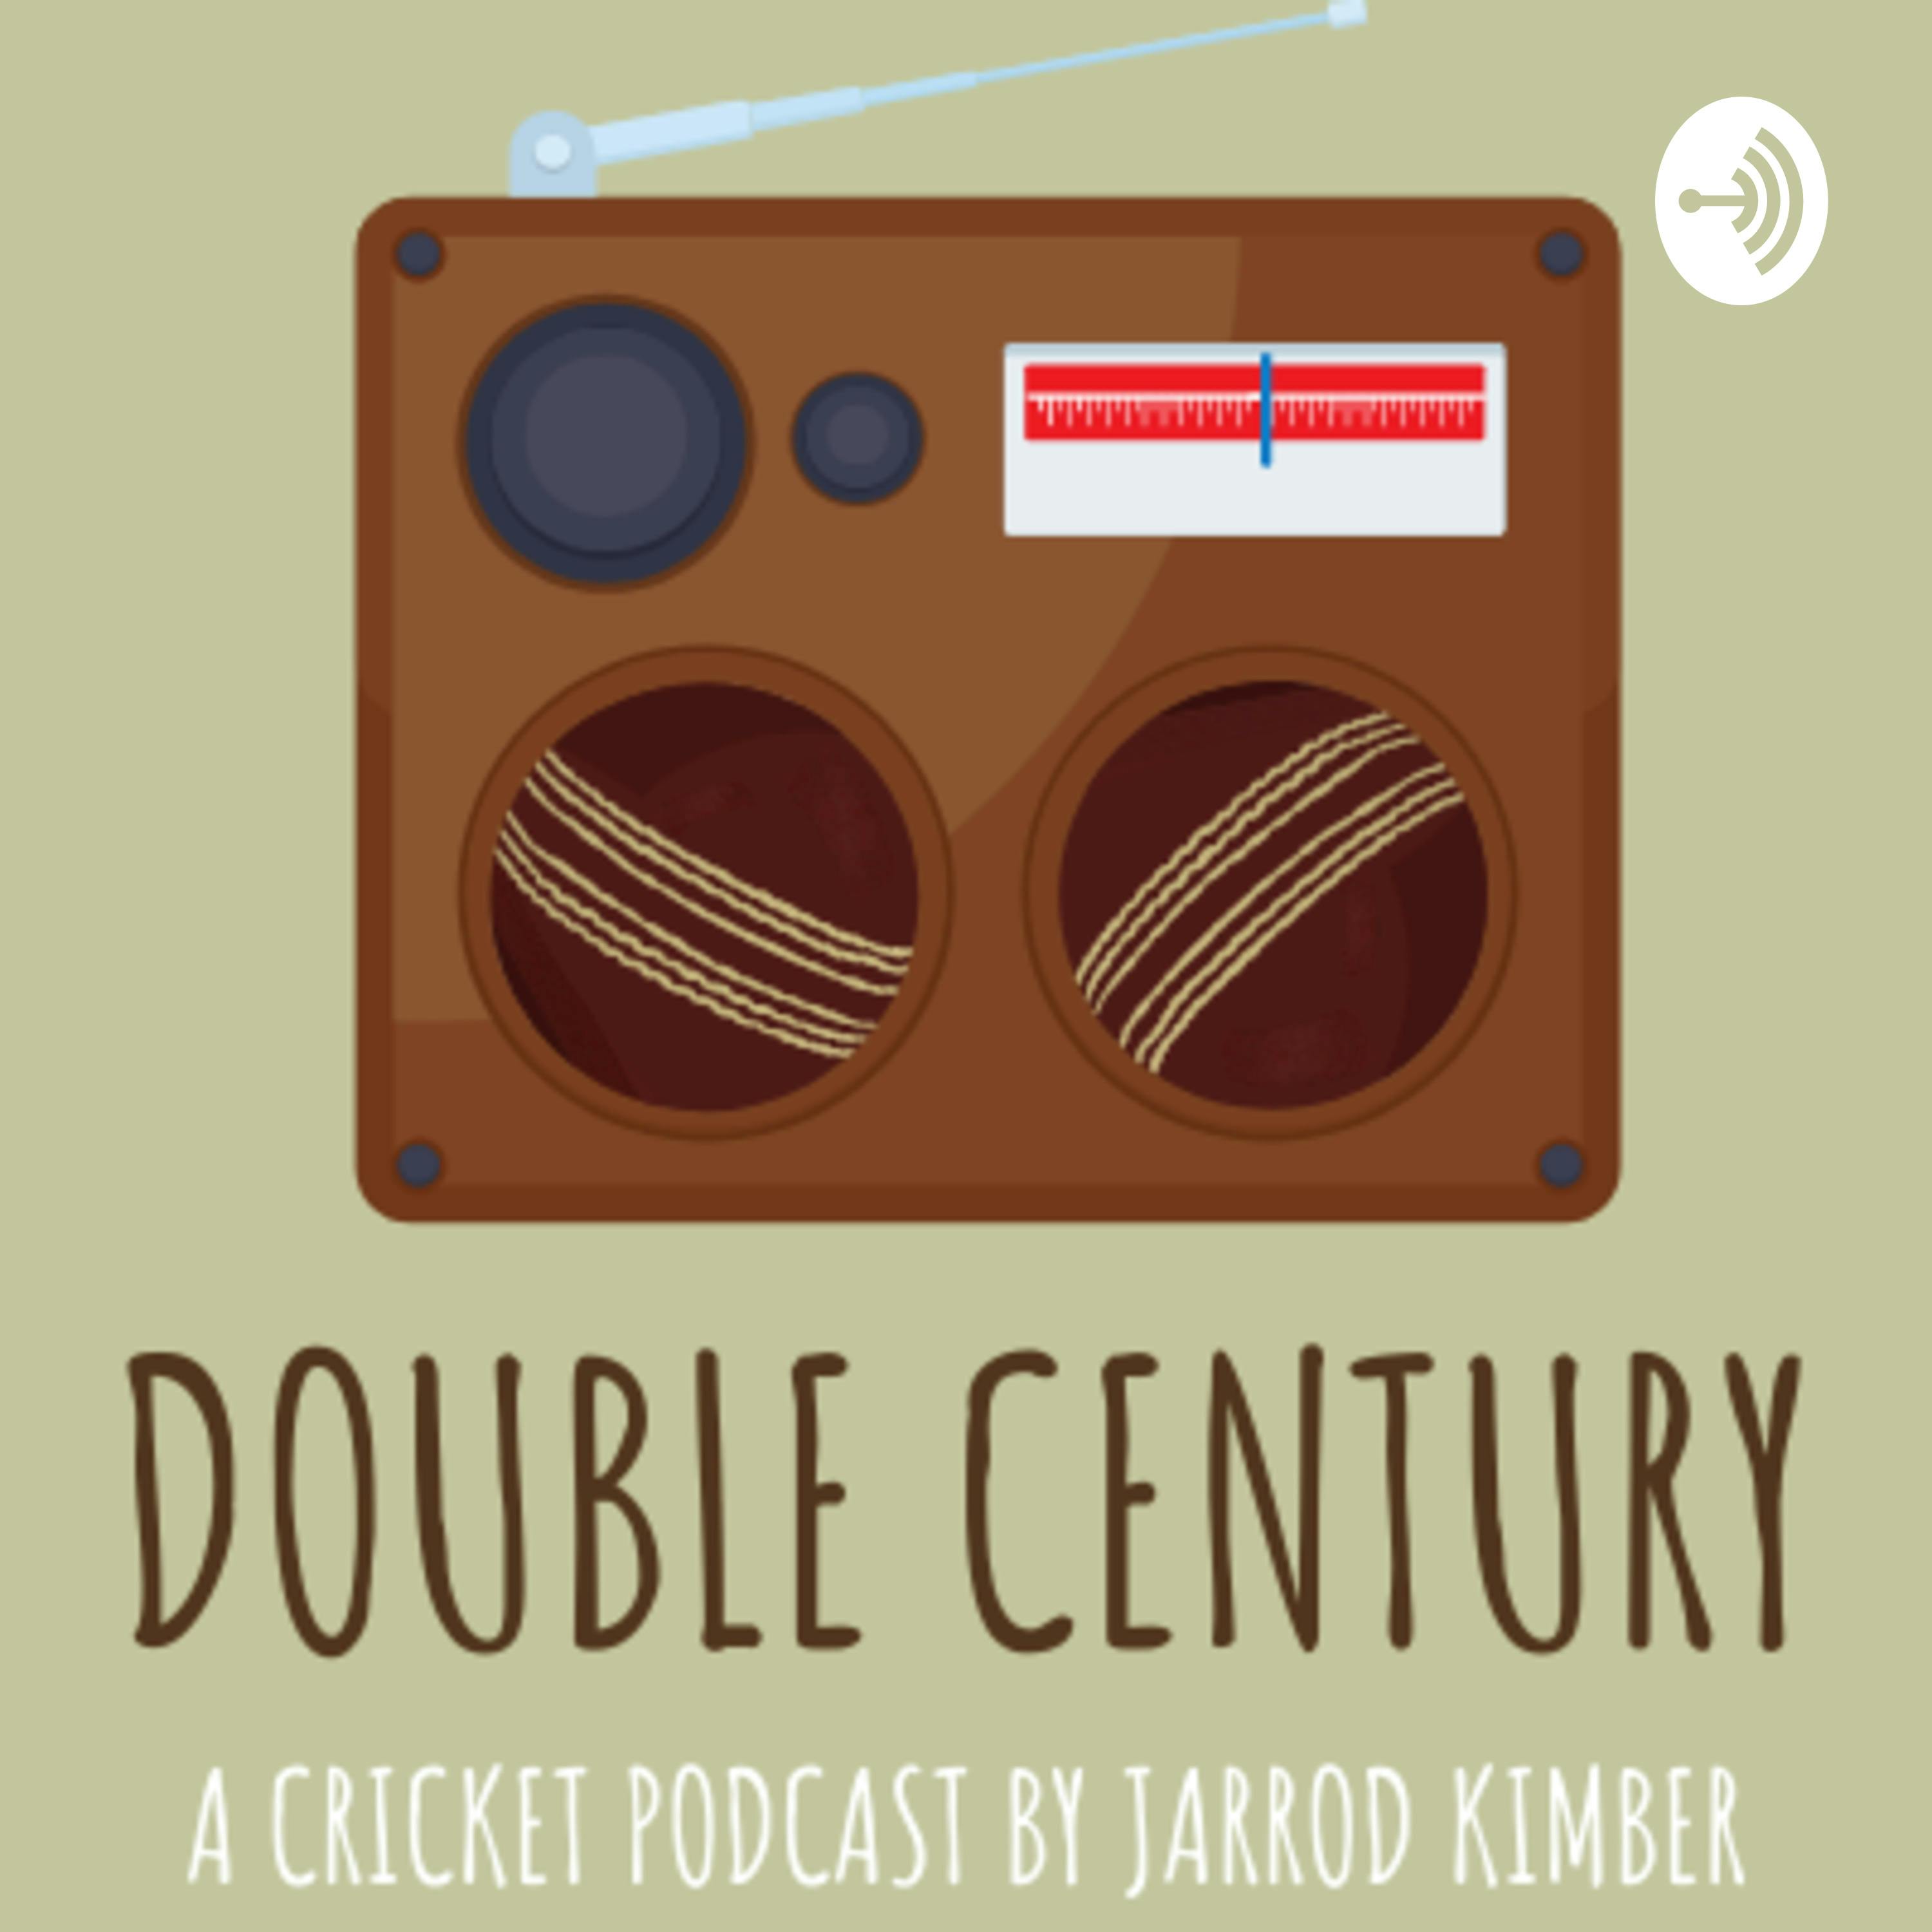 Double Century with Jarrod Kimber:Jarrod Kimber